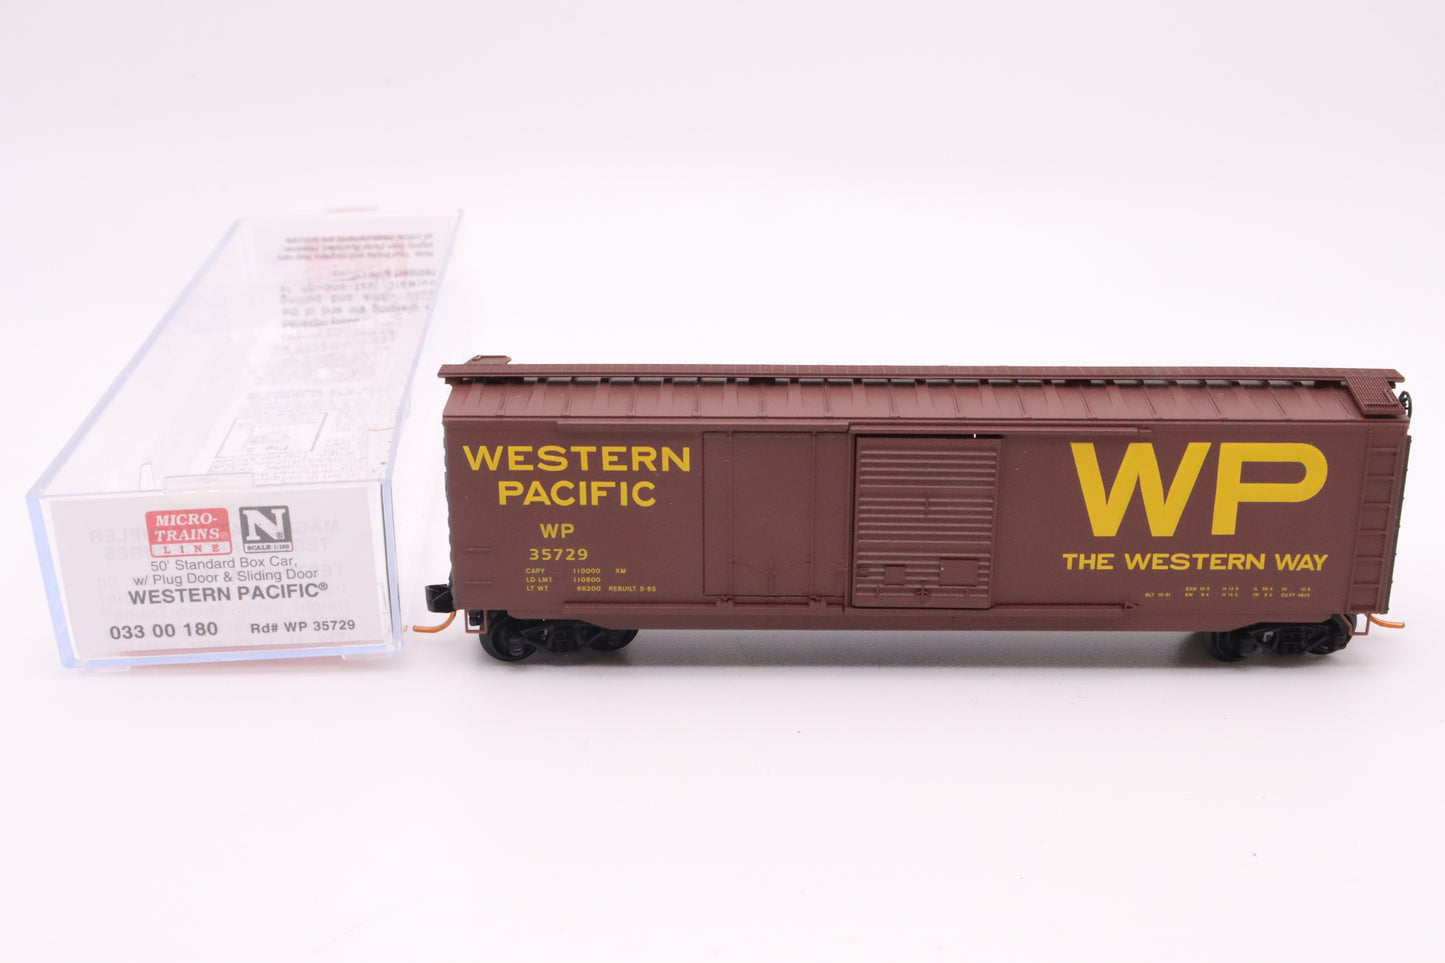 MTL-033 00 180 - 50' Standard Box Car, w/ Plug & Sliding Door - Western Pacific - WP #35729